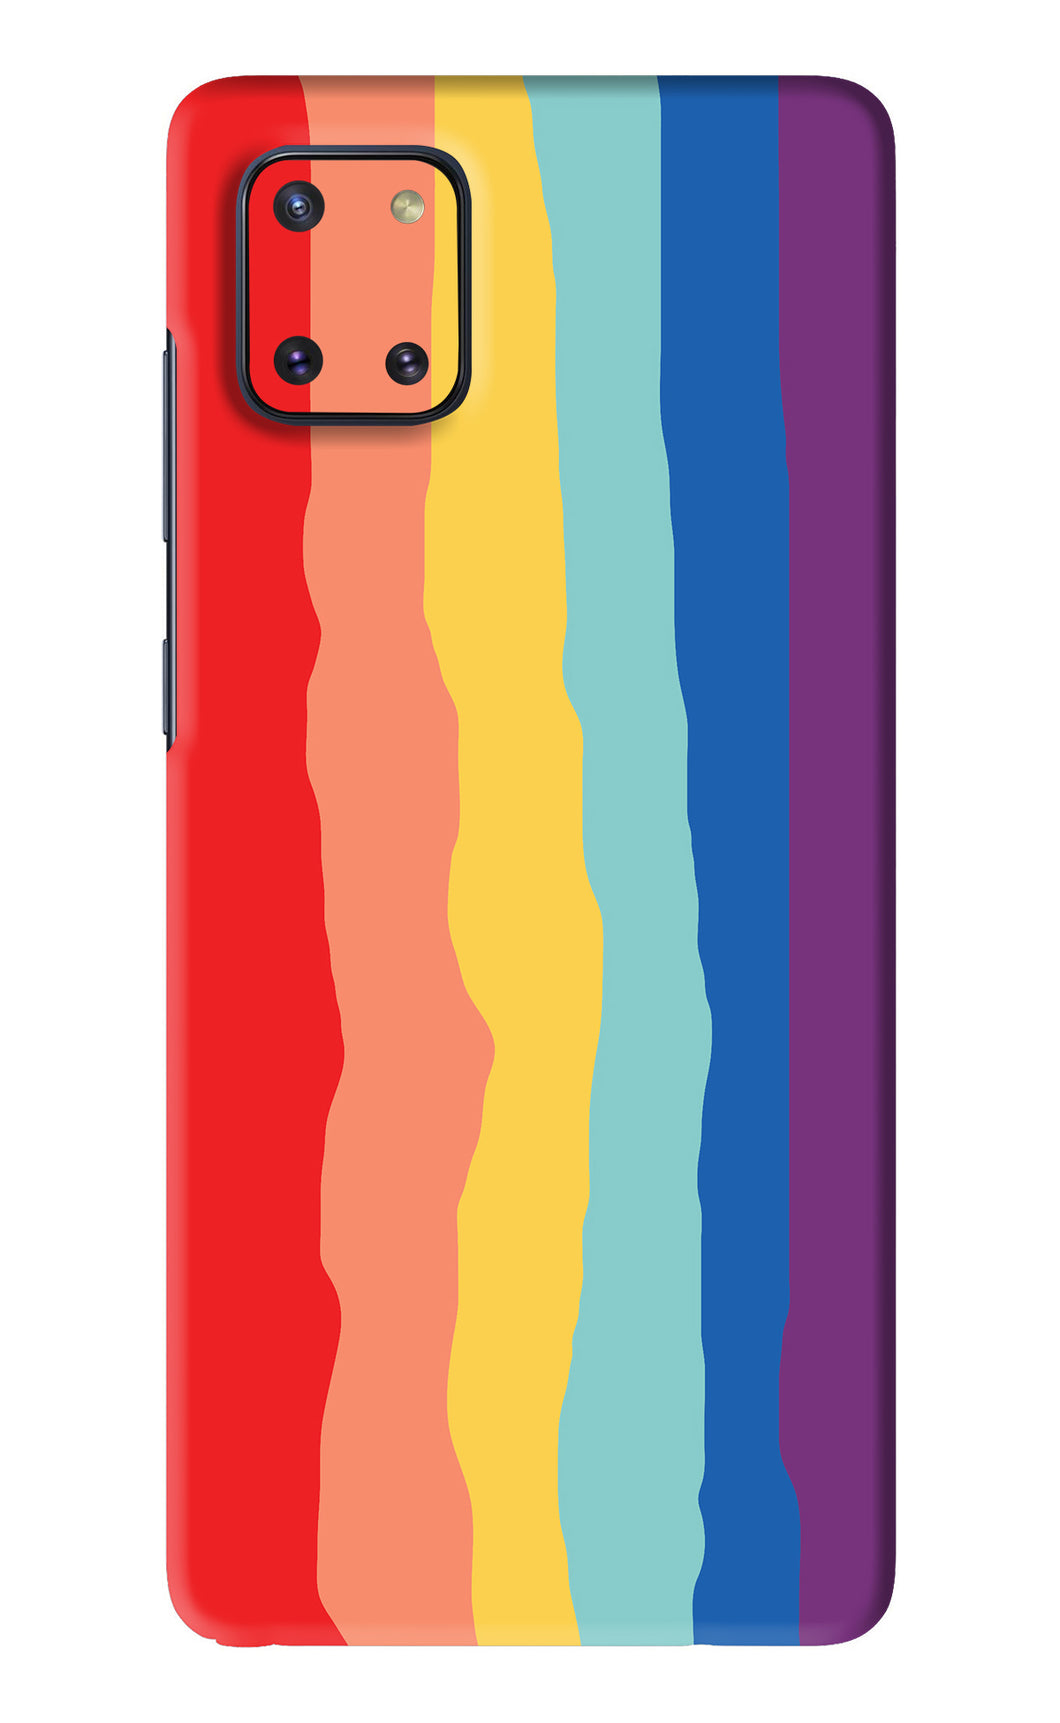 Rainbow Samsung Galaxy Note 10 Lite Back Skin Wrap